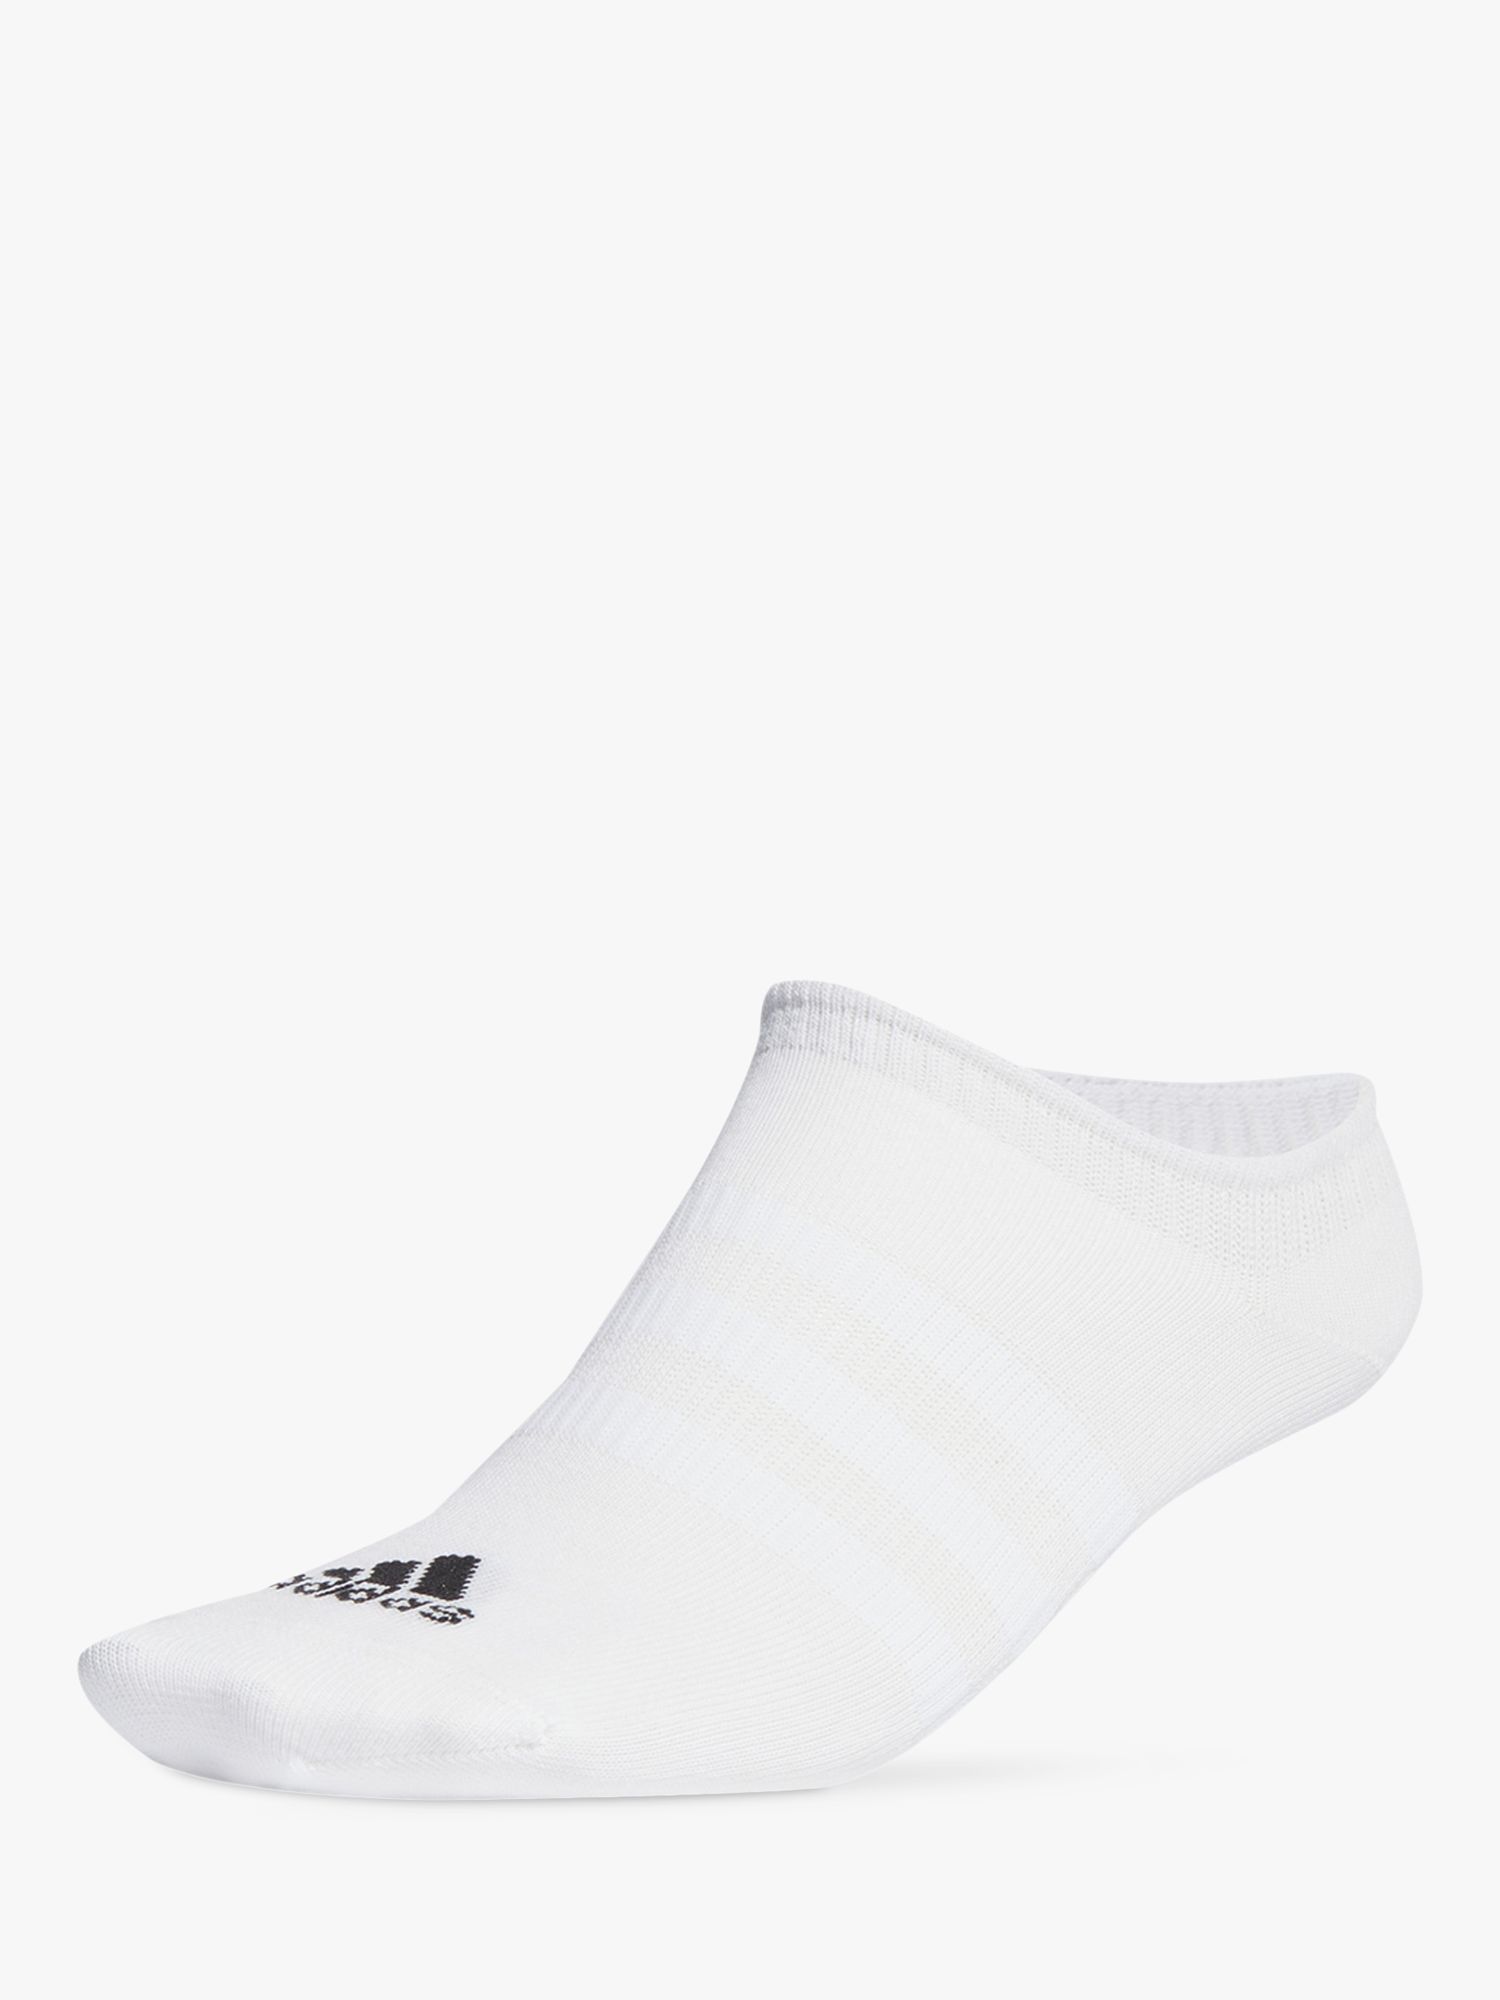 adidas Thin and Light No-Show Socks, Pack of 3, White/Black at John ...